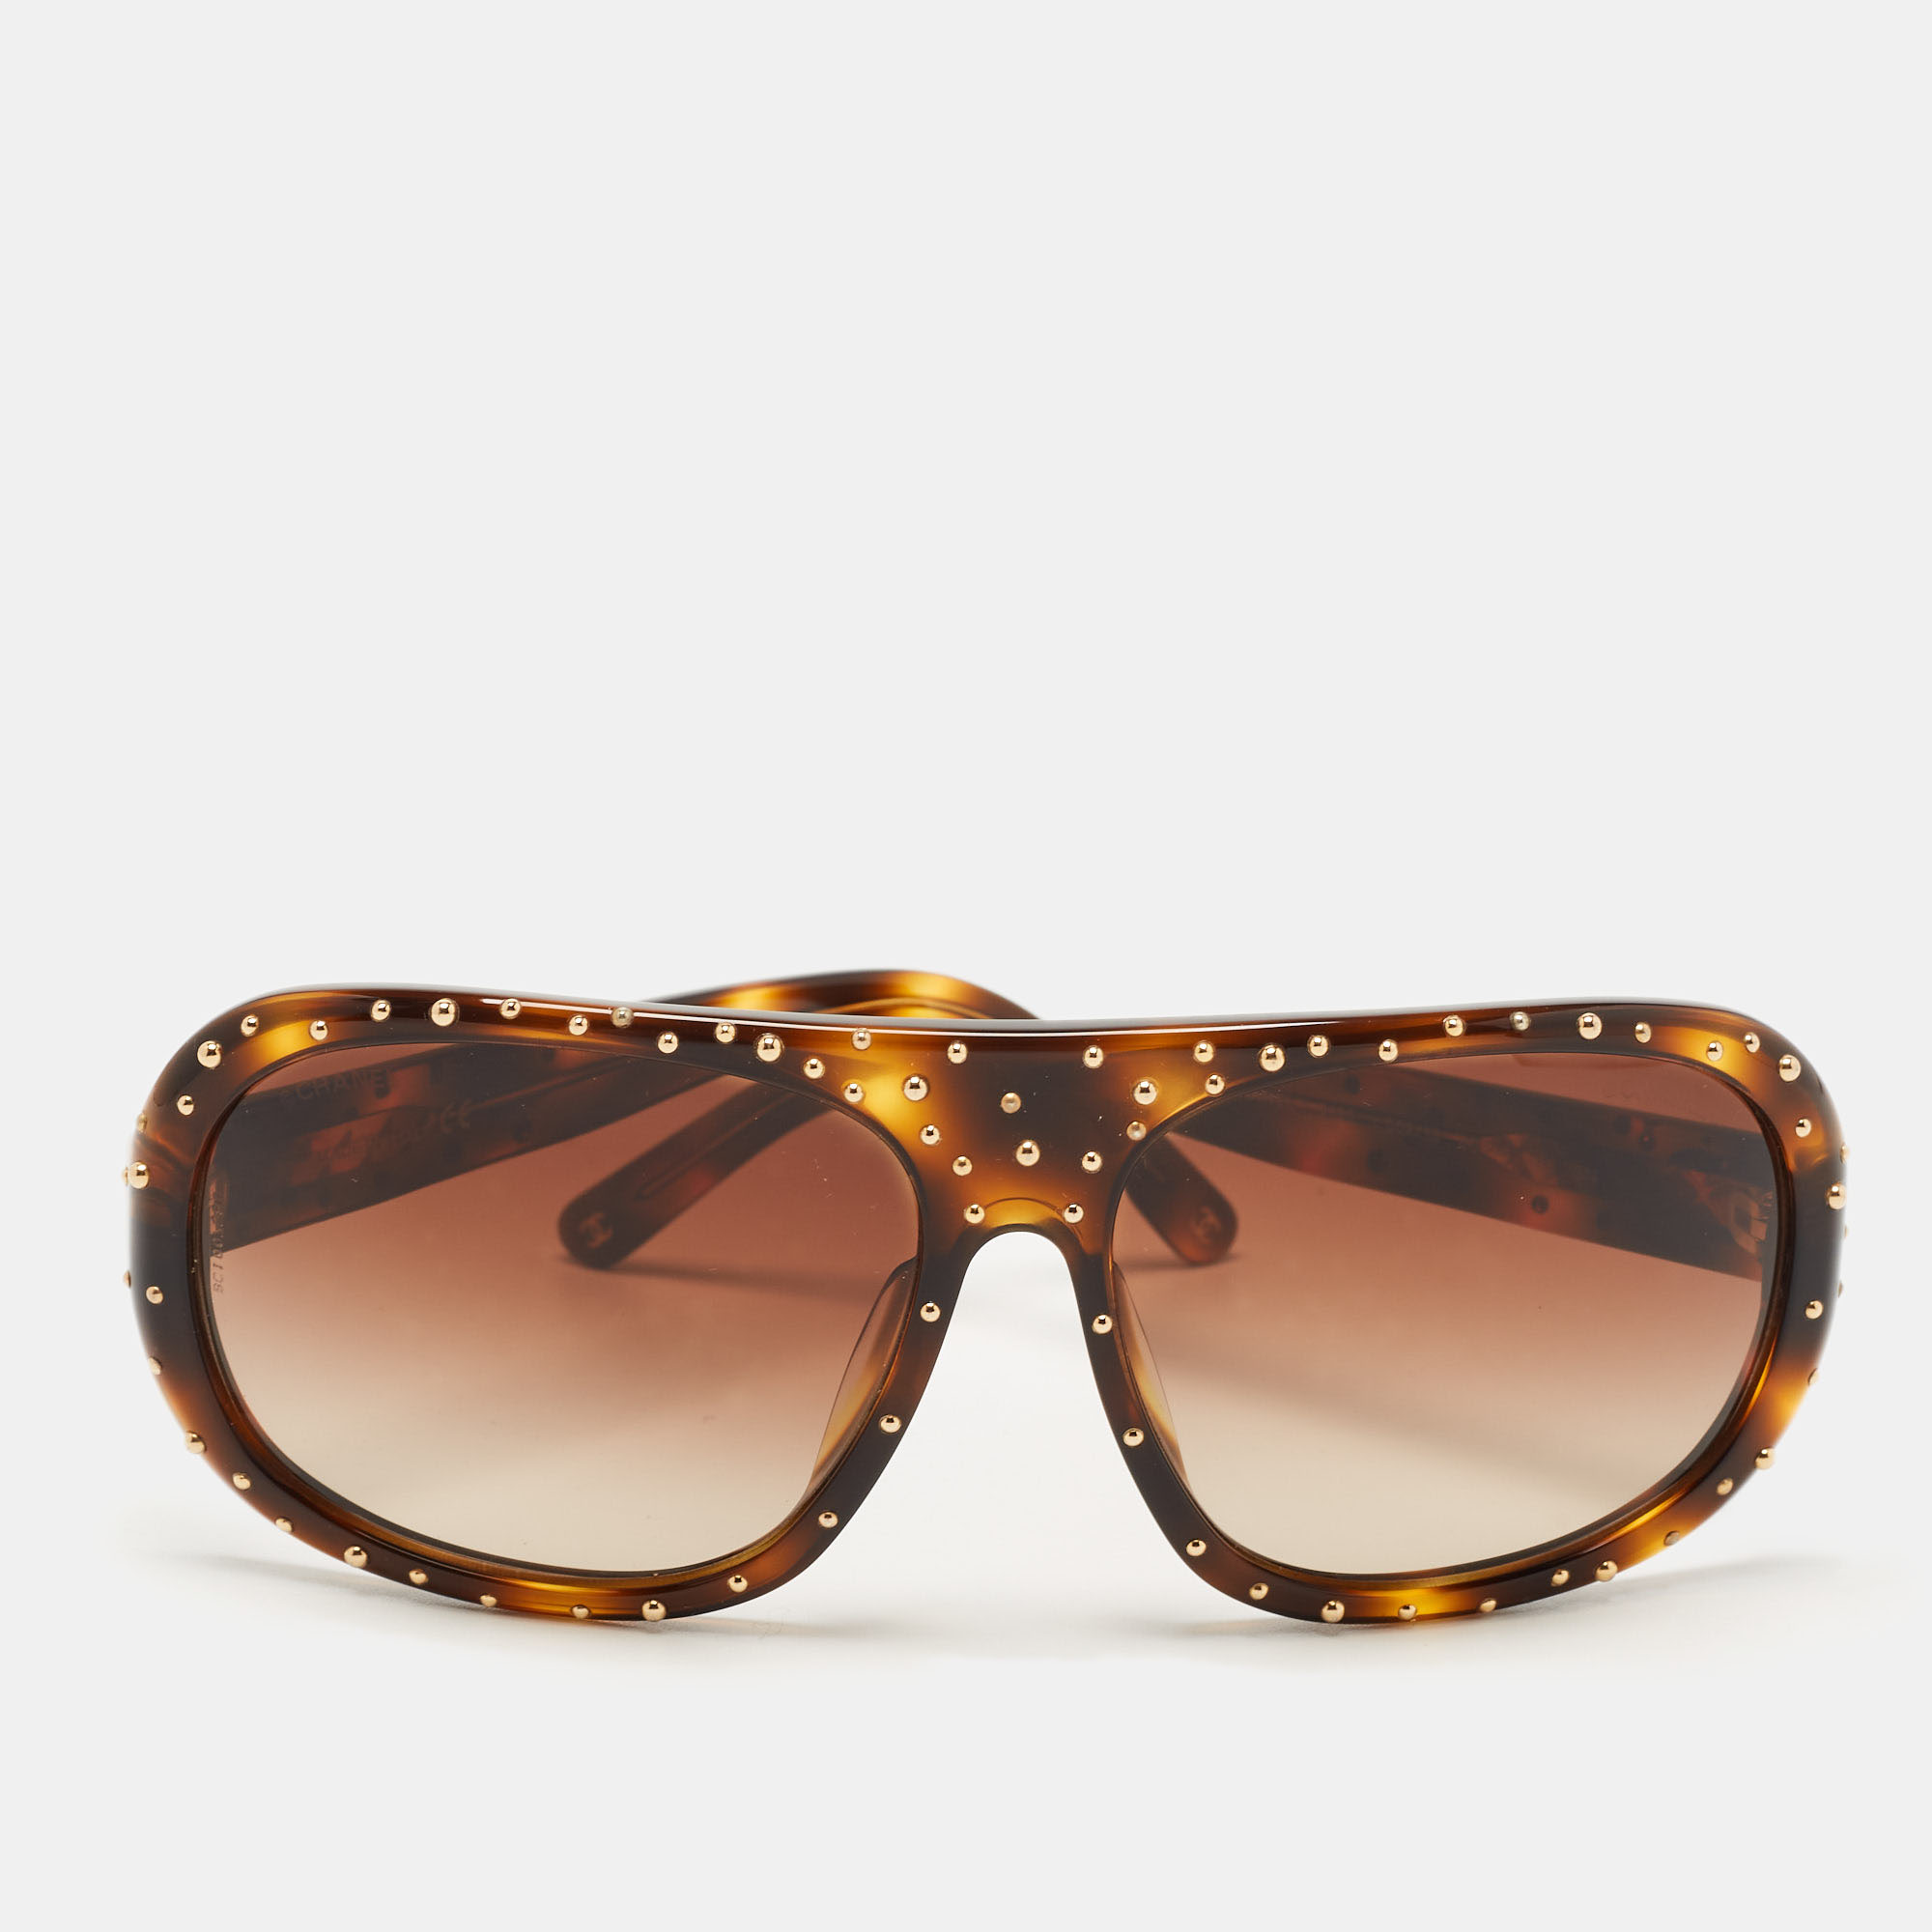 Chanel Sunglasses 4218 Orange Mirrored on Mercari